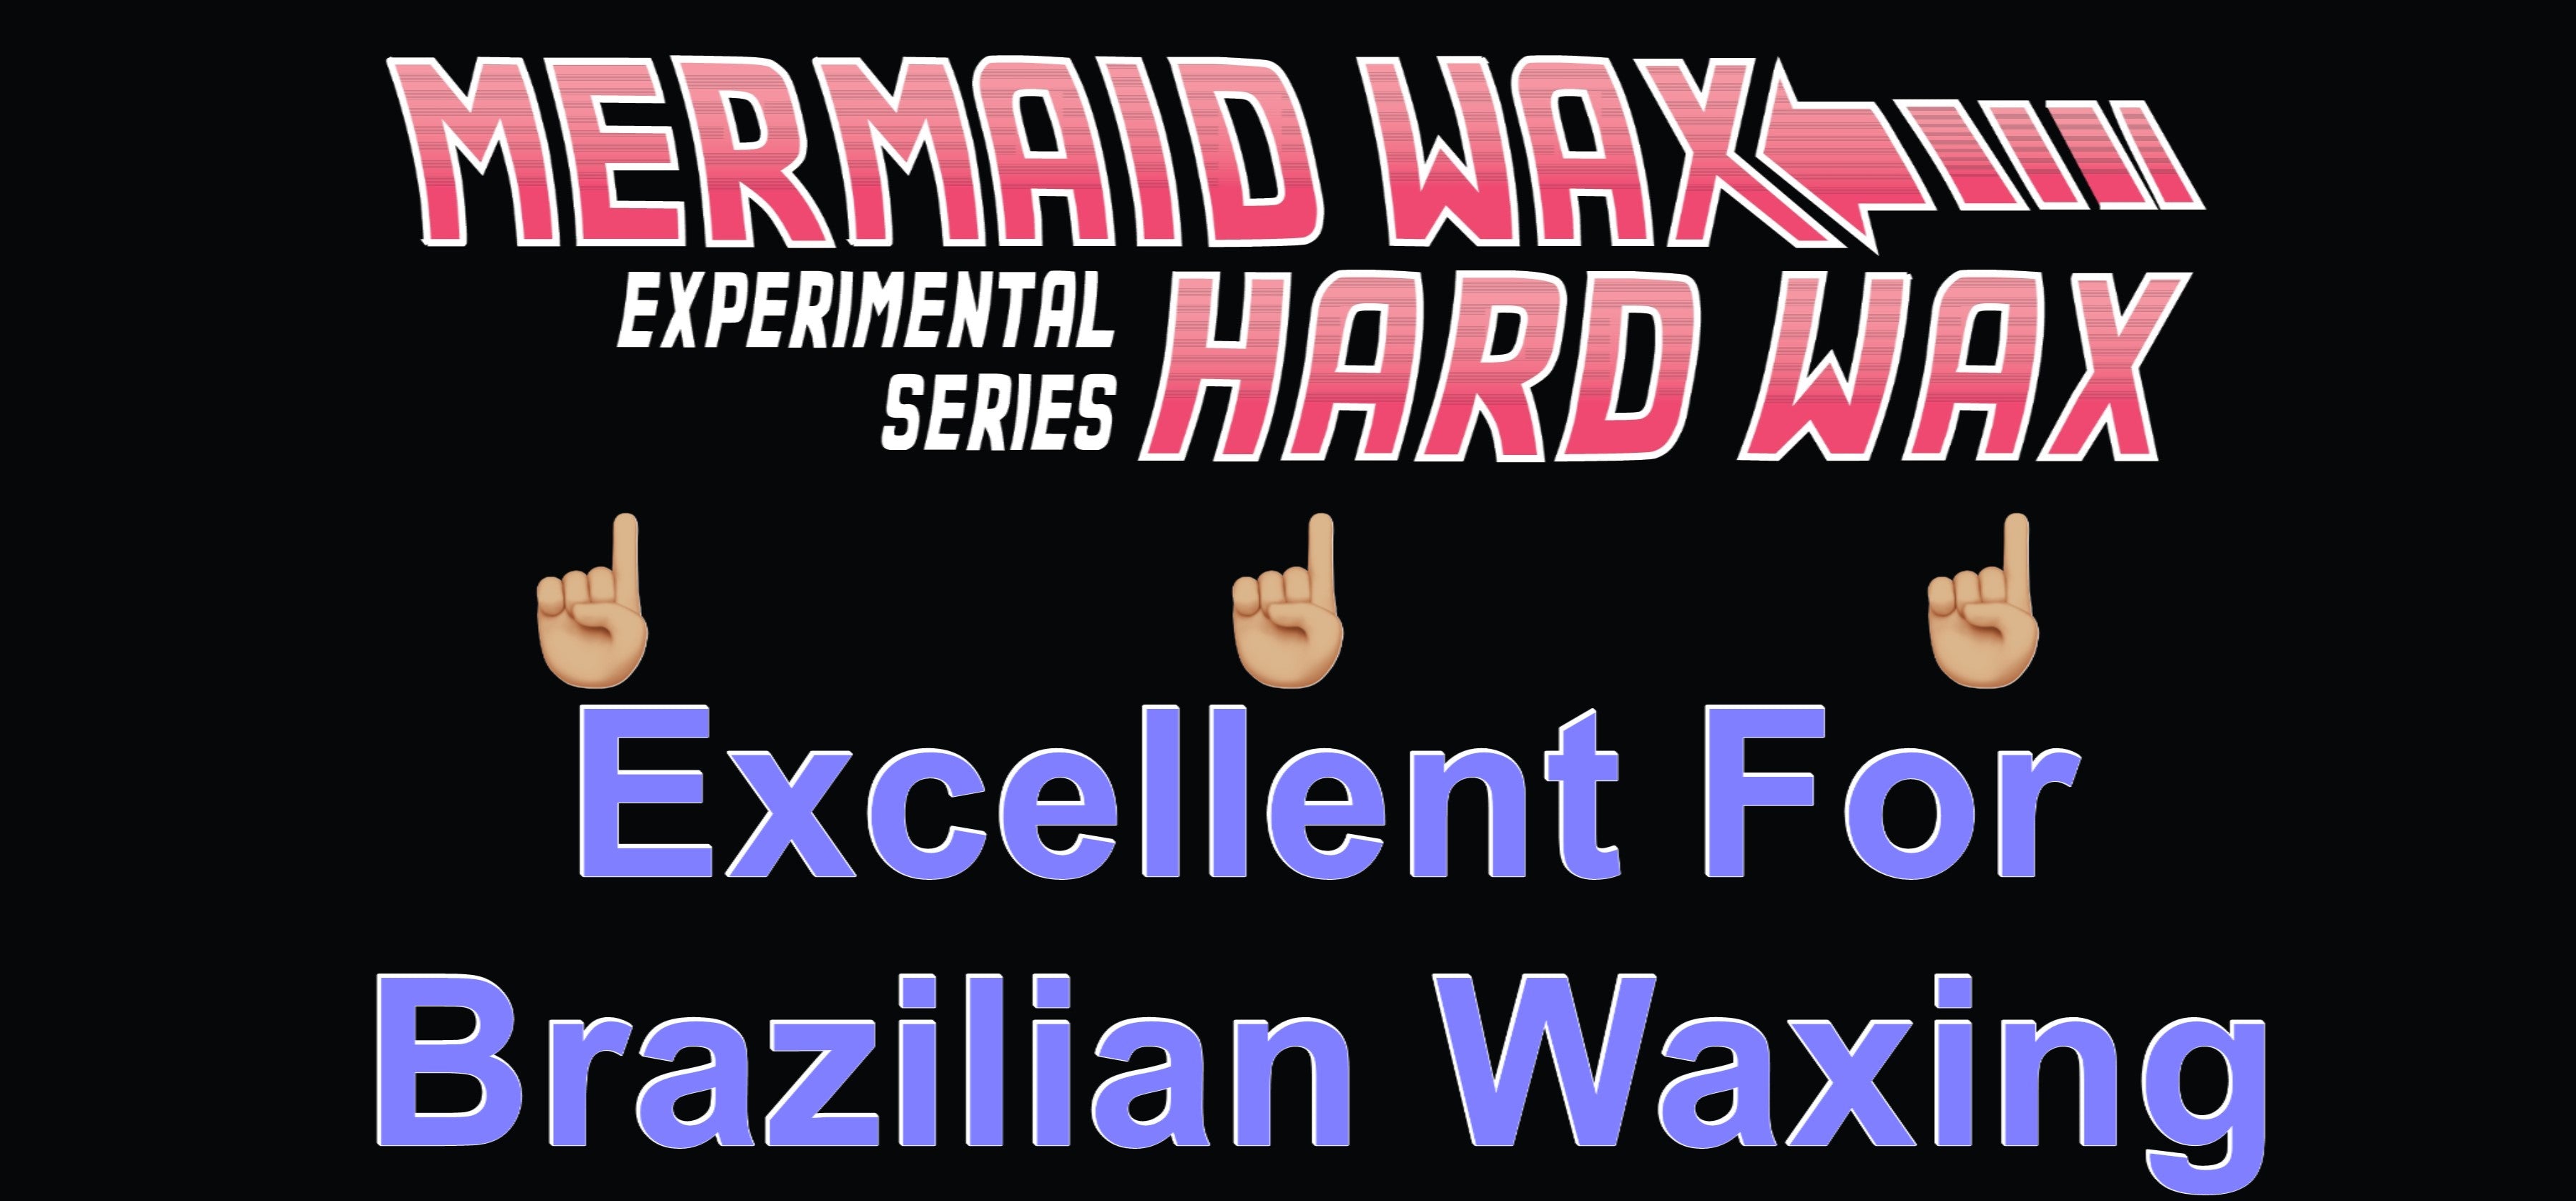 Experimental Series by Mermaid Wax is Best For Brazilian Waxing